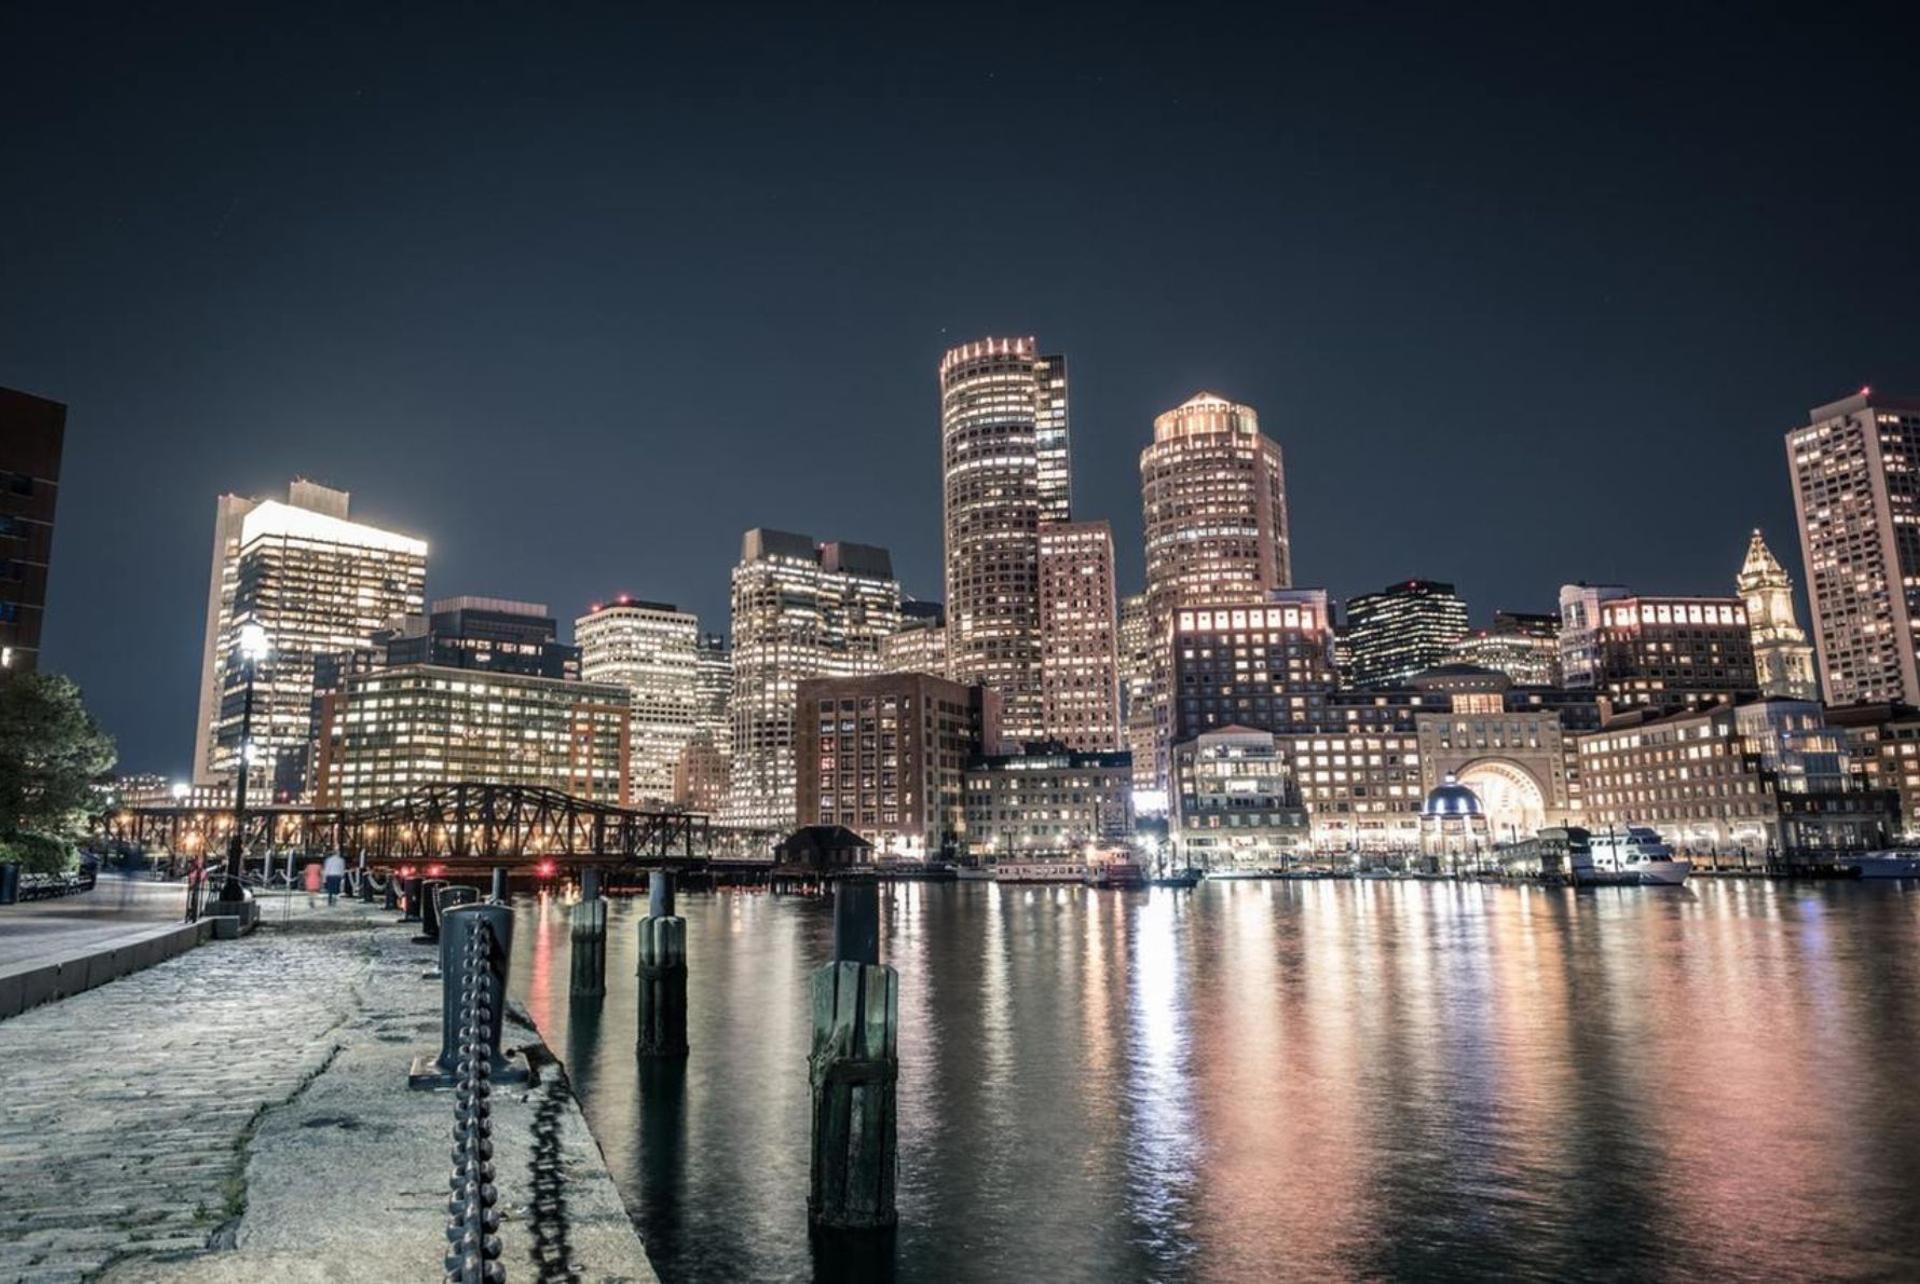 Boston Photography Workshops: Night Photography